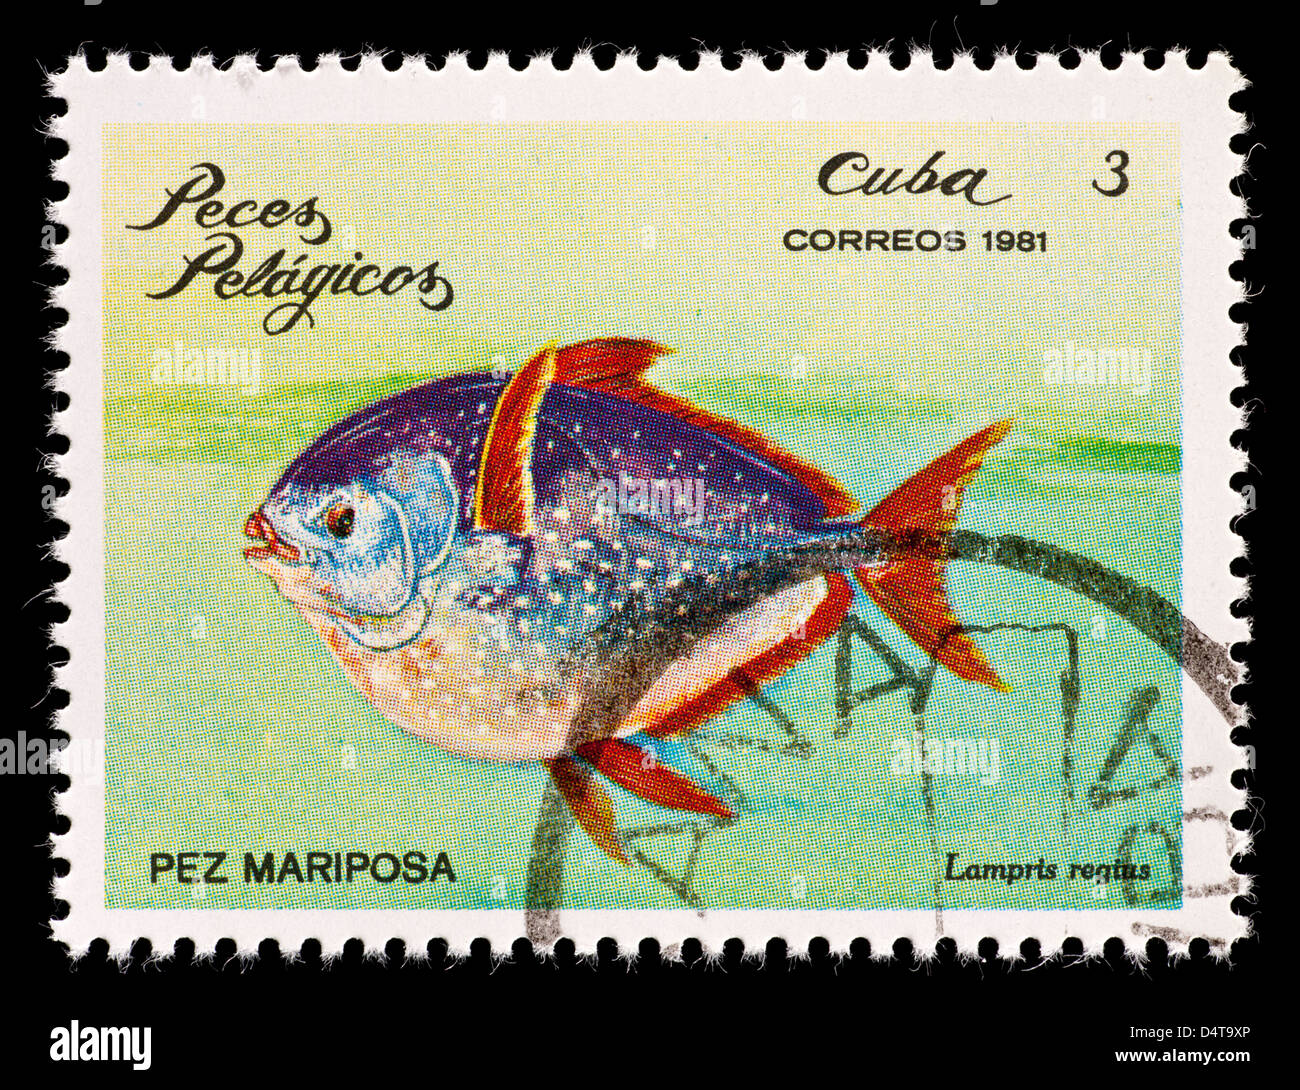 Postage stamp from Cuba depicting Opah moonfish (Lampris regius) Stock Photo